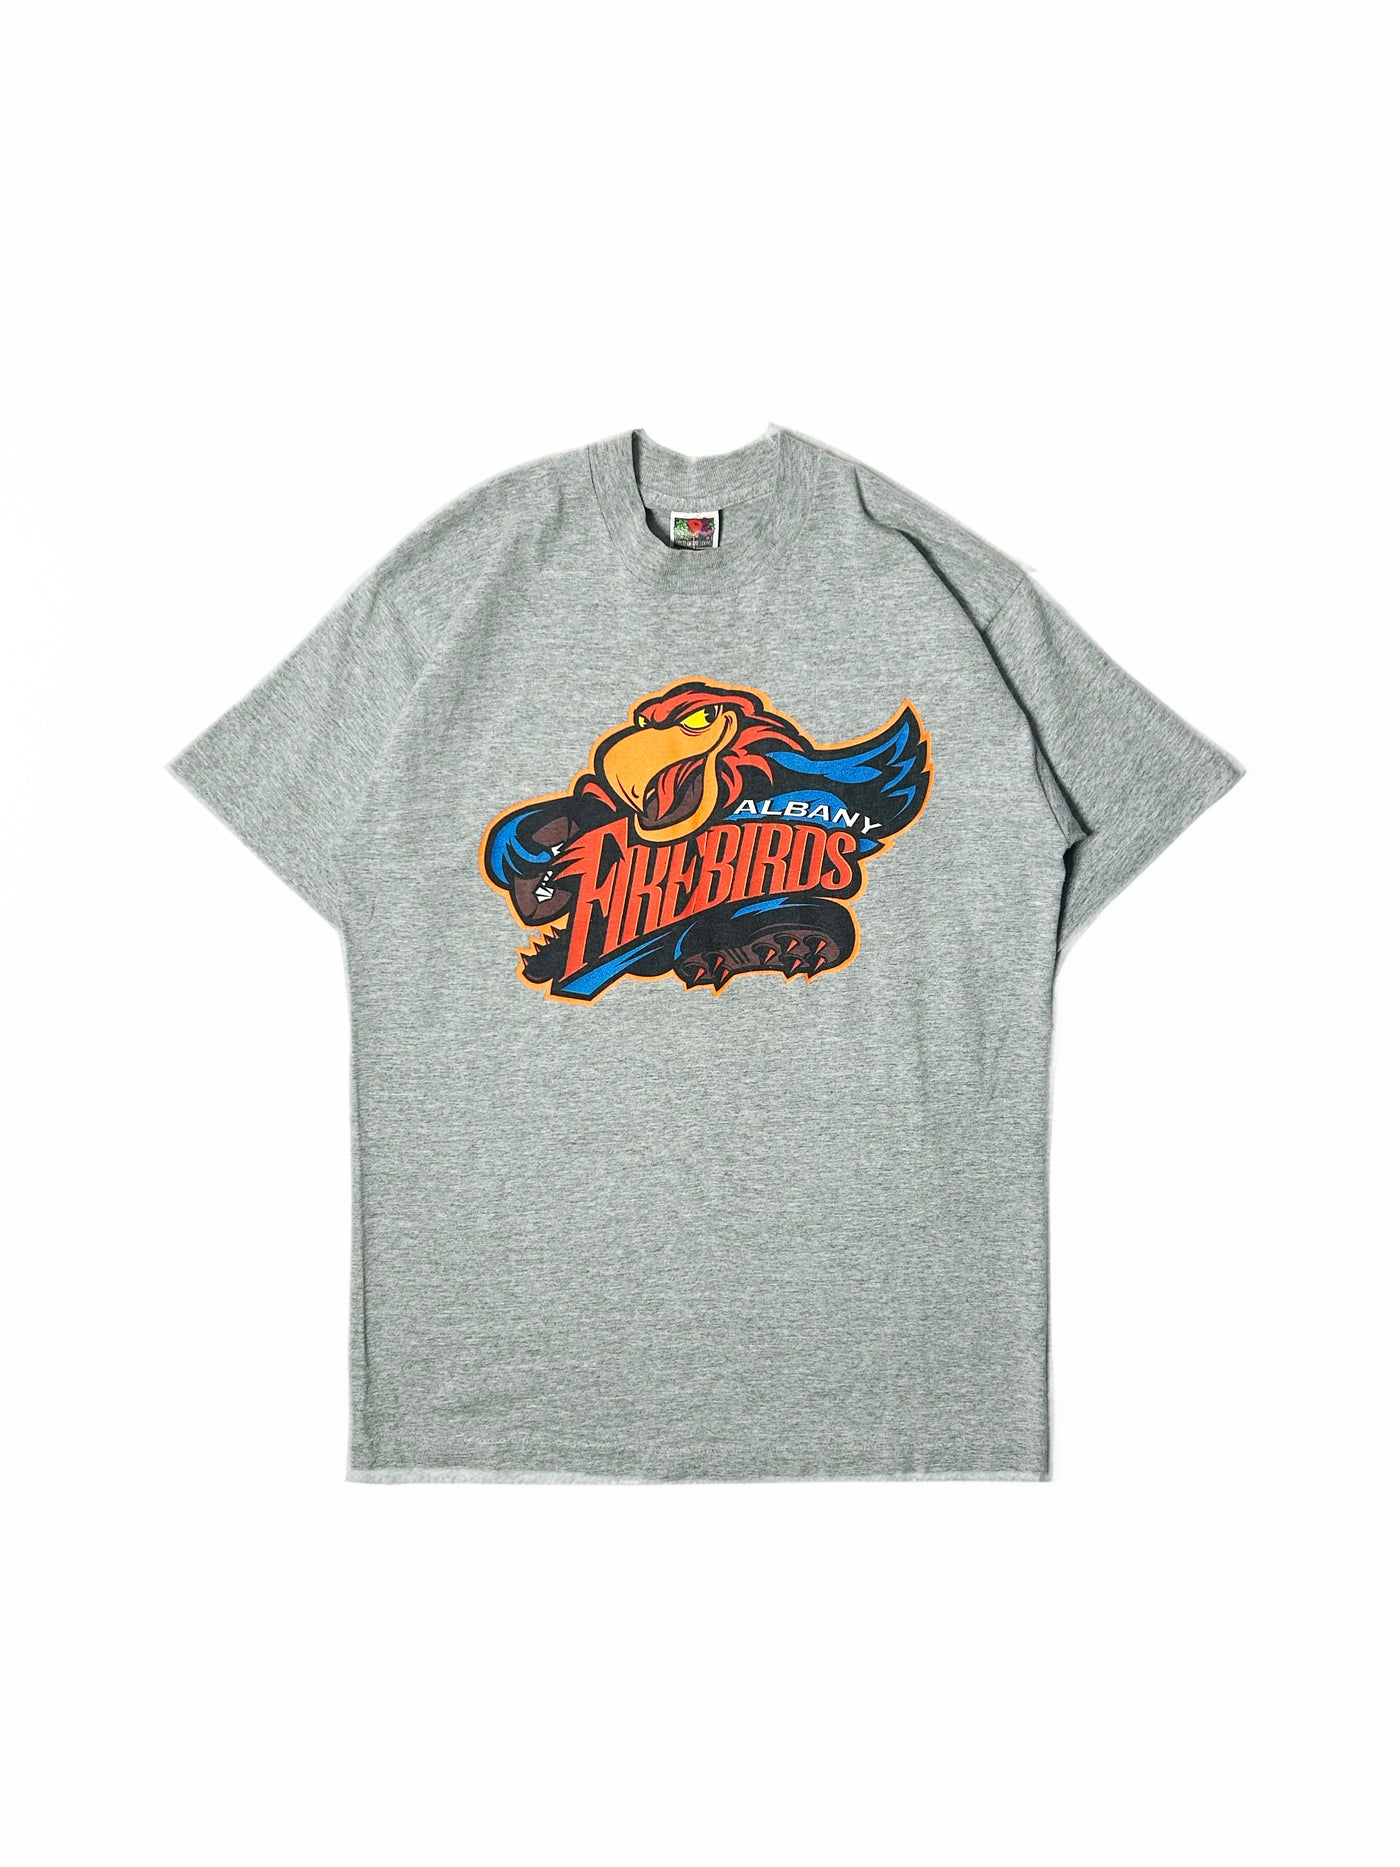 Vintage 90s Albany Firebirds Logo T-Shirt